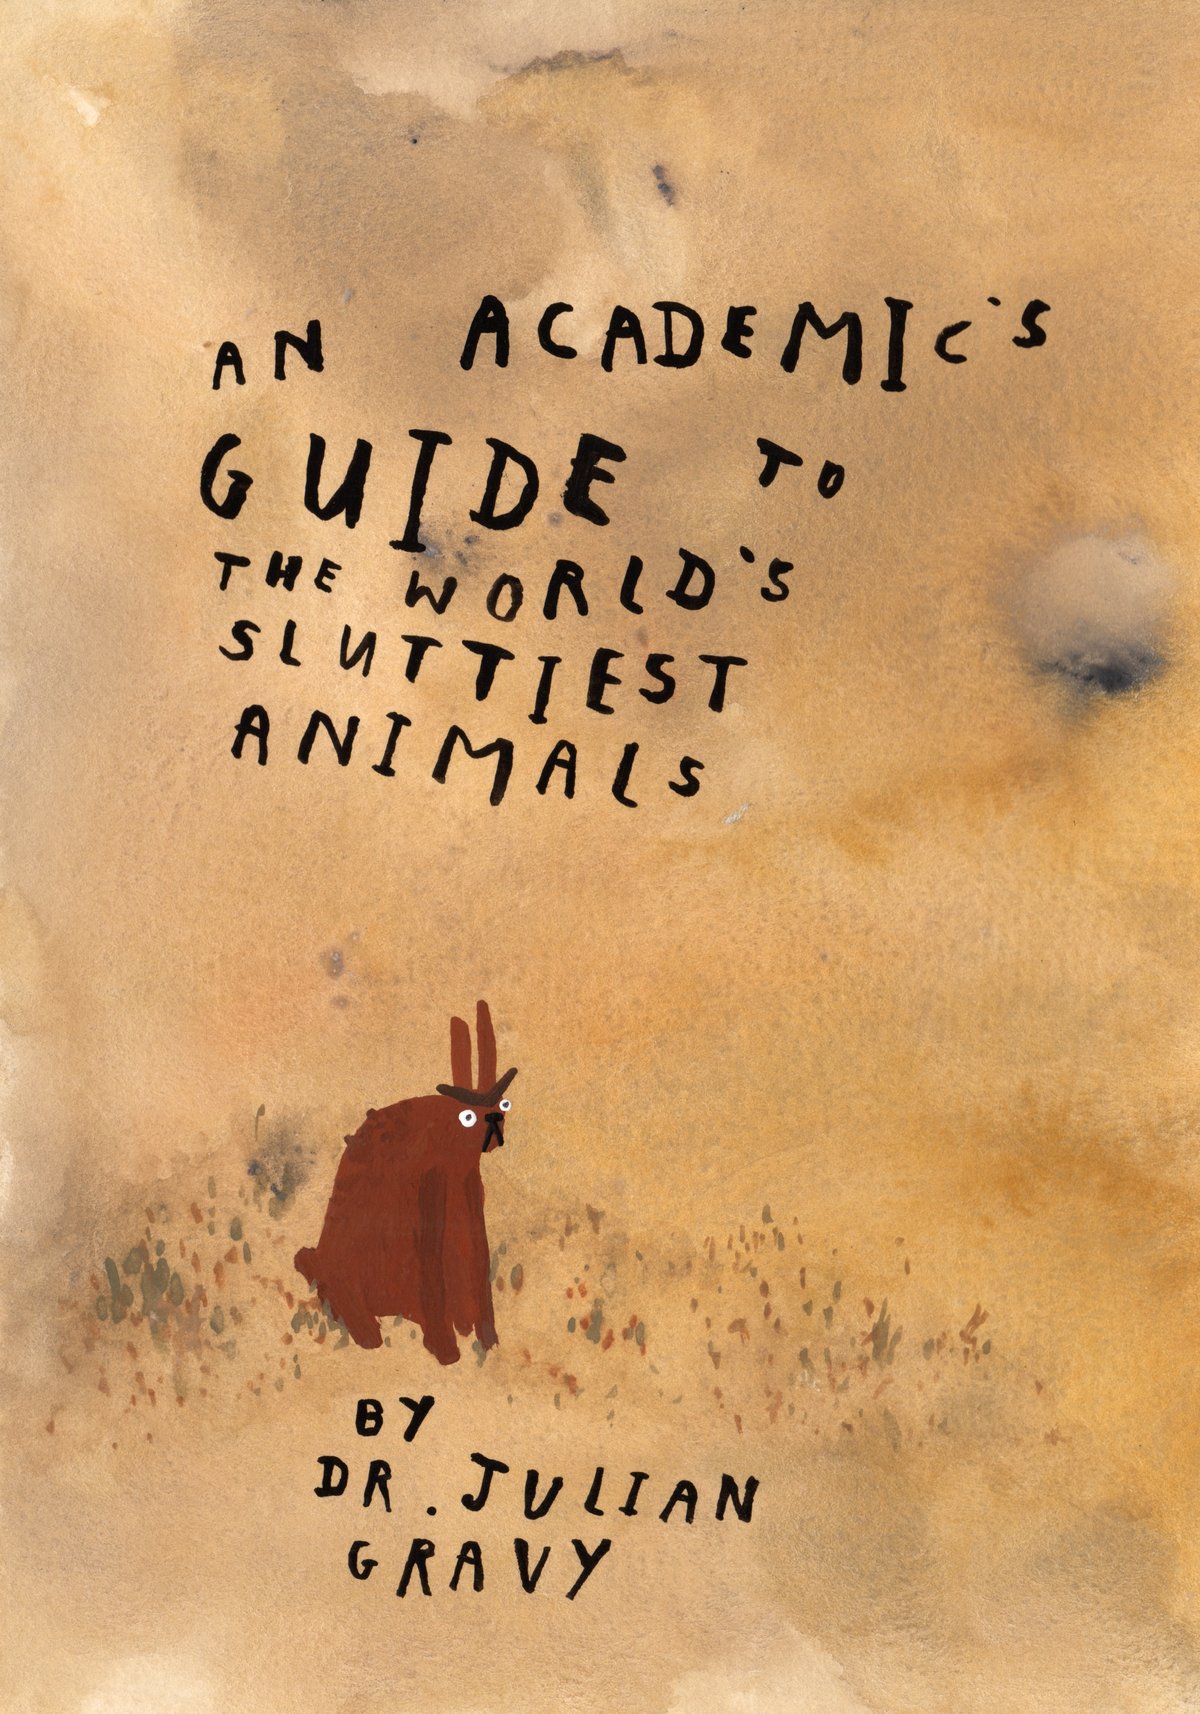 Academics guide to the worlds sluttiest animals (comic)